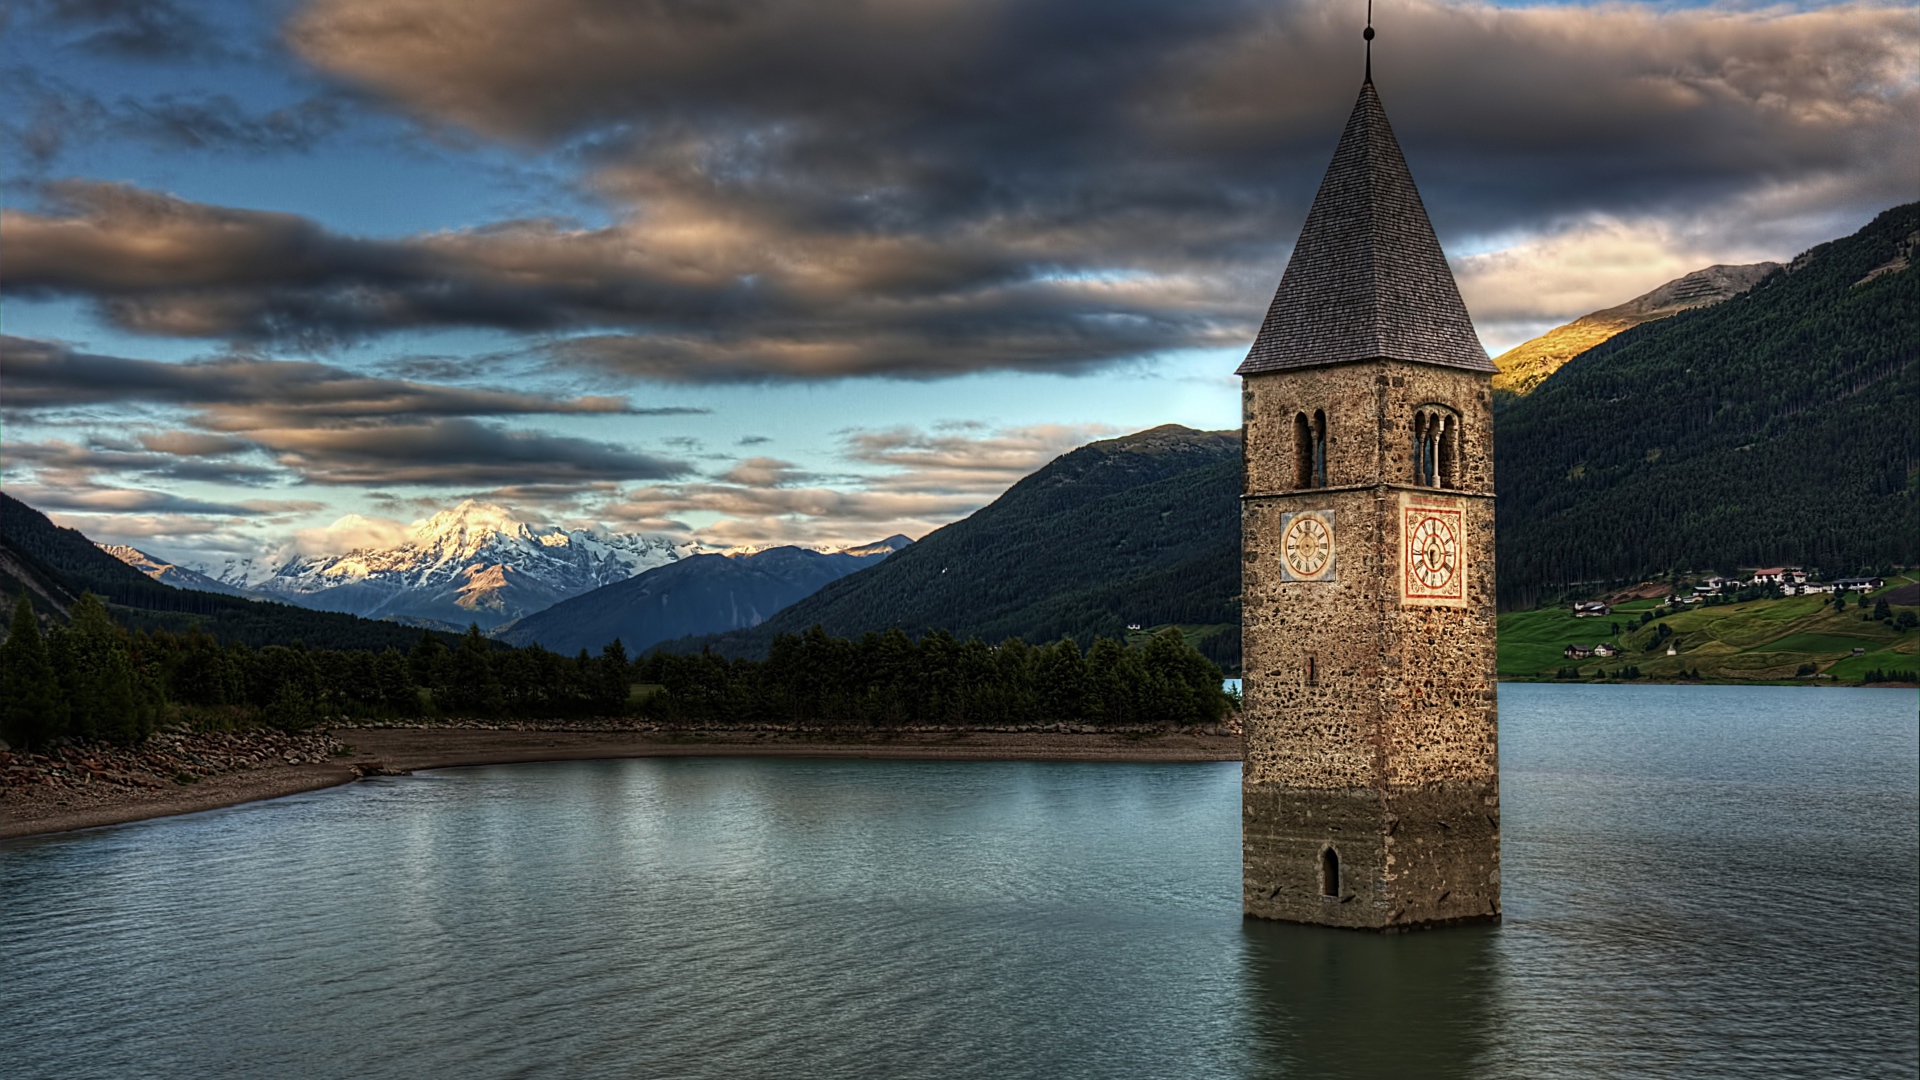 Старинная часовня на фоне красивого неба посреди озера Резия, Италия